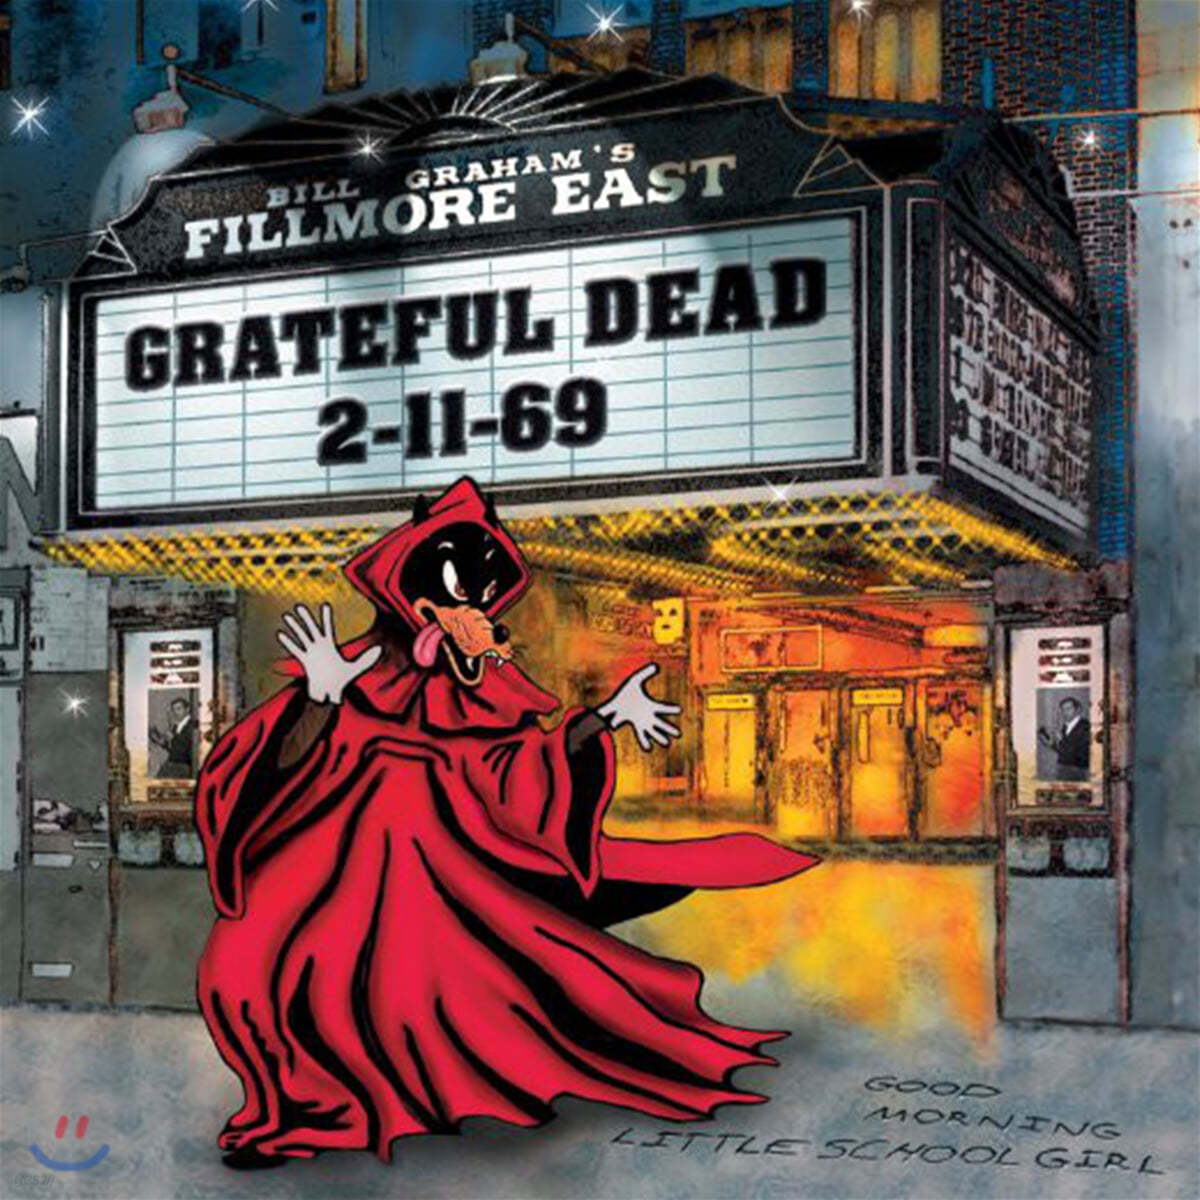 Grateful Dead (그레이트풀 데드) - Fillmore East 2-11-69 [3LP]